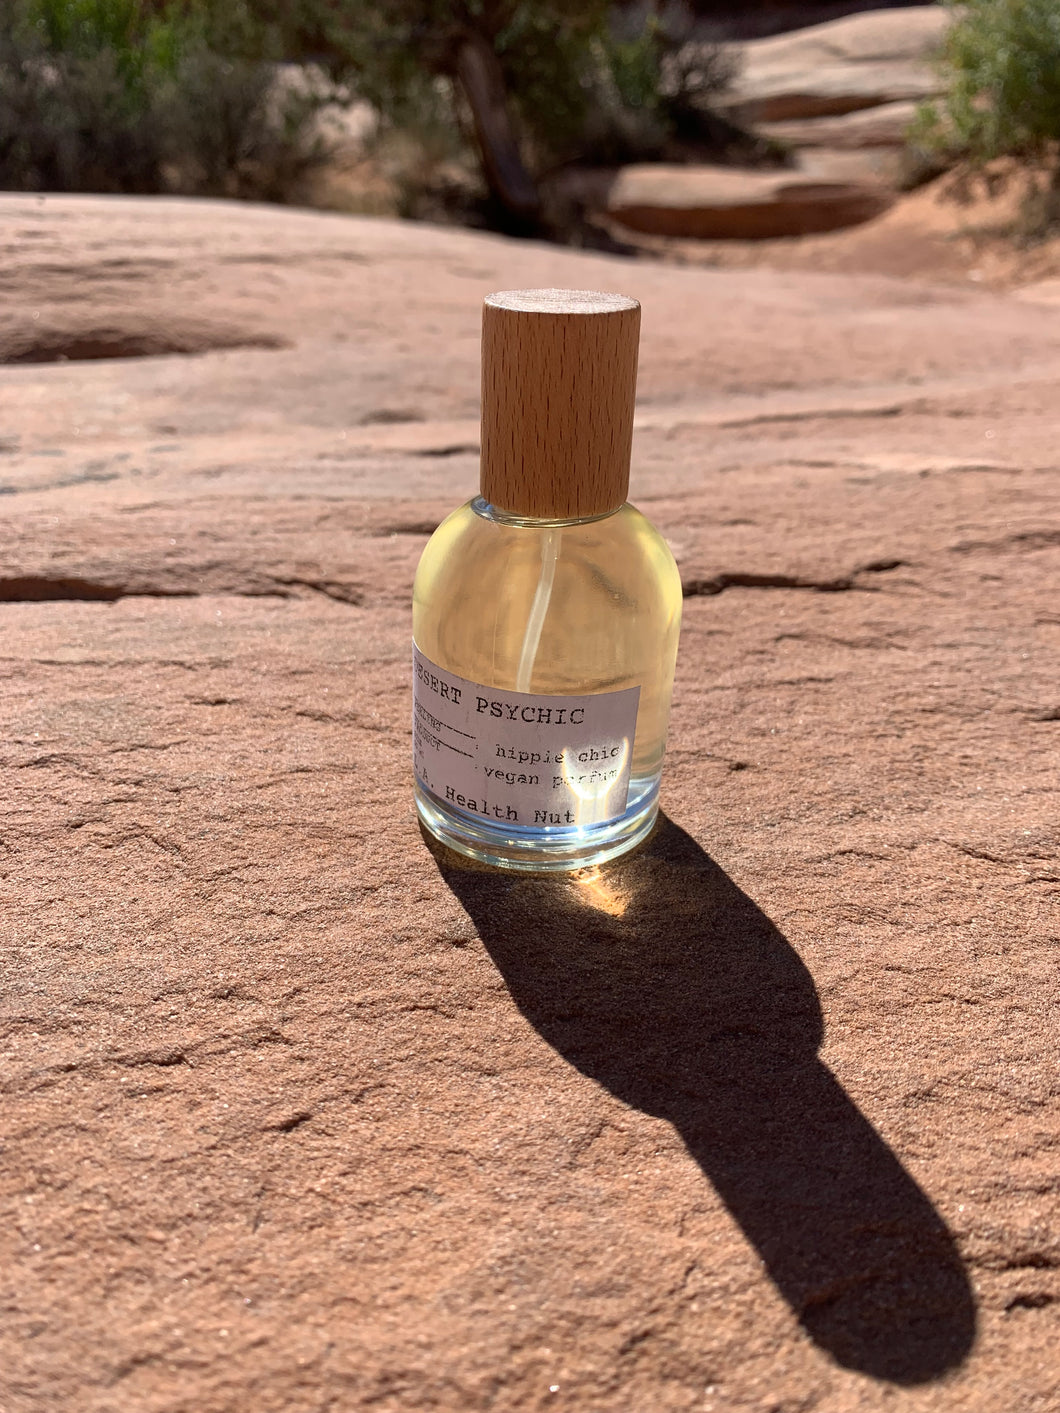 Desert Psychic vegan parfum